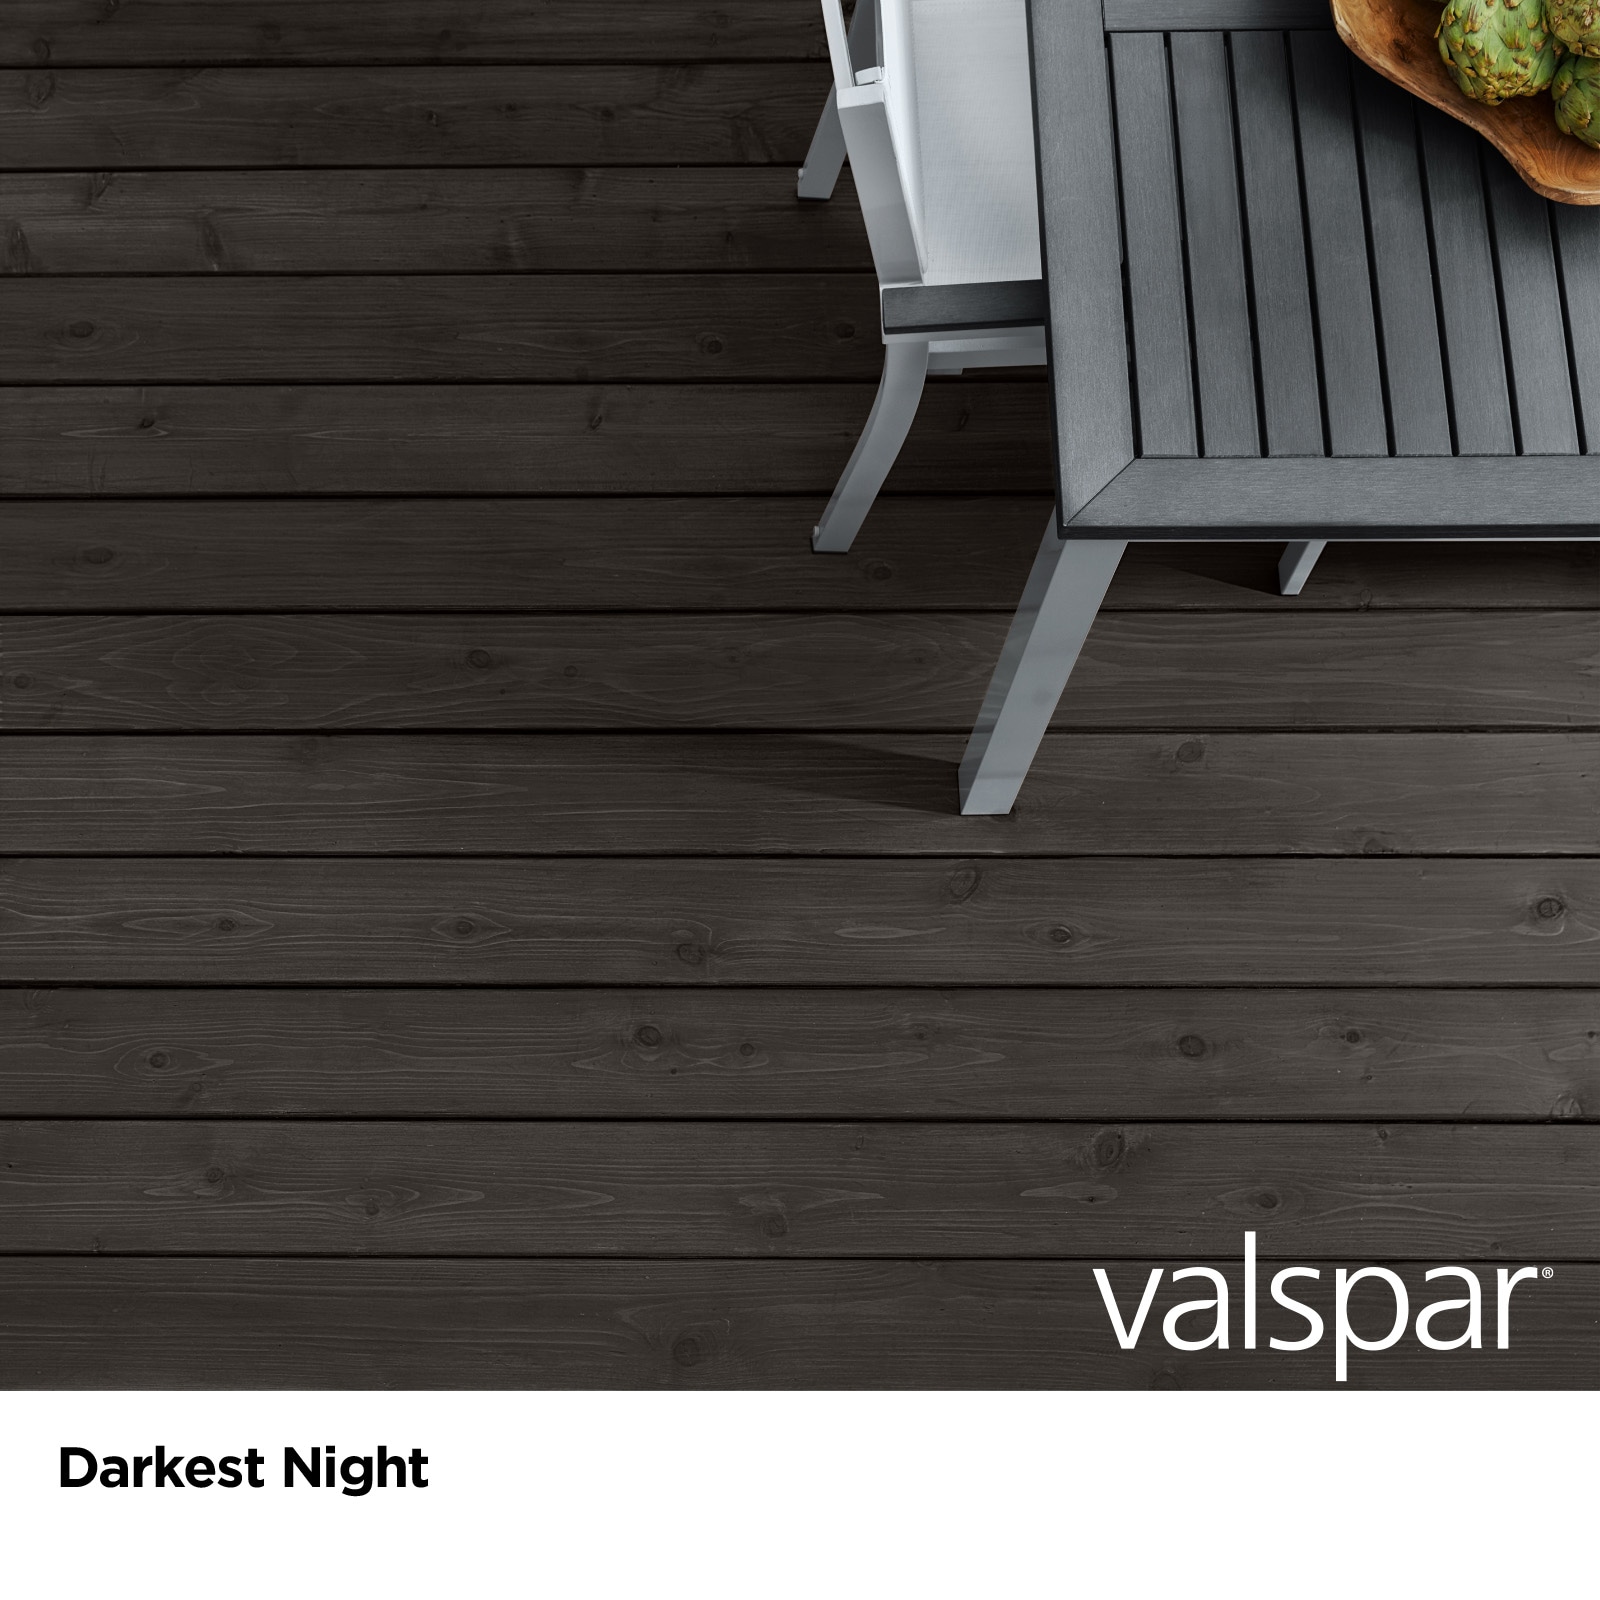 Valspar Darkest Night Semi-transparent Exterior Wood Stain and